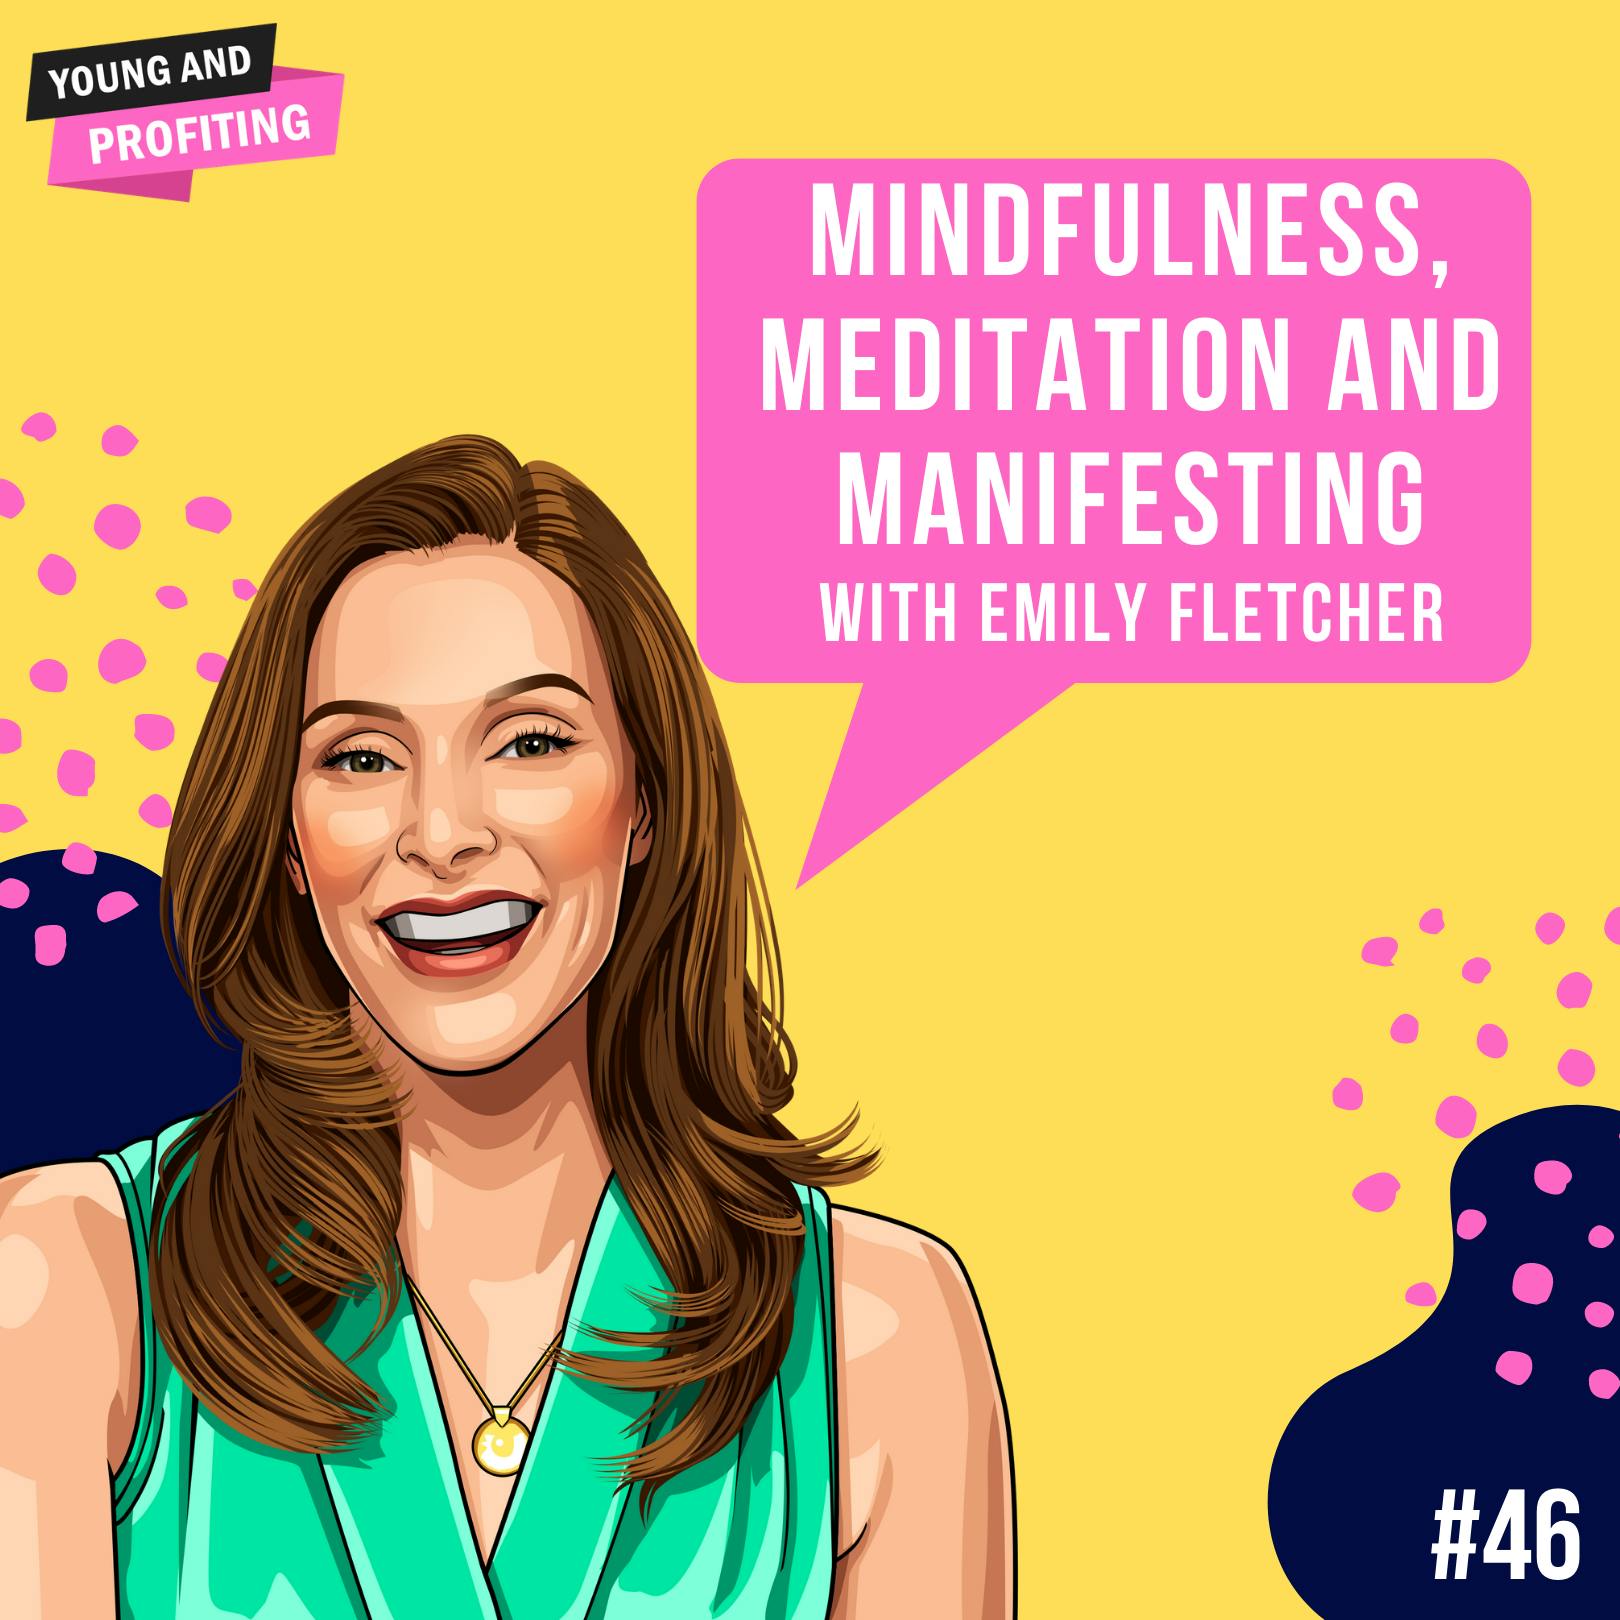 Emily Fletcher: Mindfulness, Meditation and Manifesting | E46 by Hala Taha | YAP Media Network